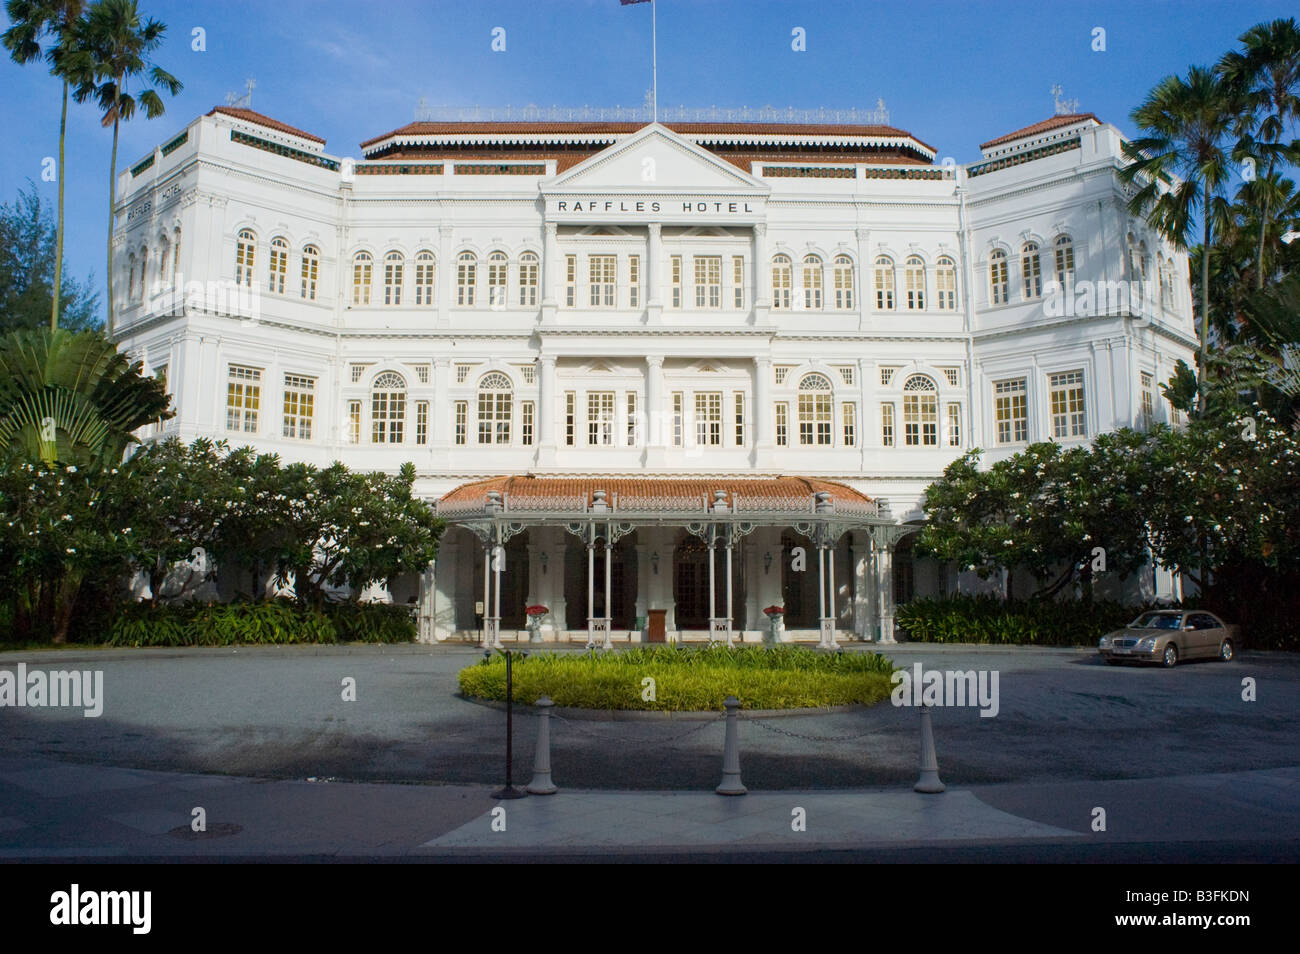 Raffles Hotel, Singapore icon. Stock Photo